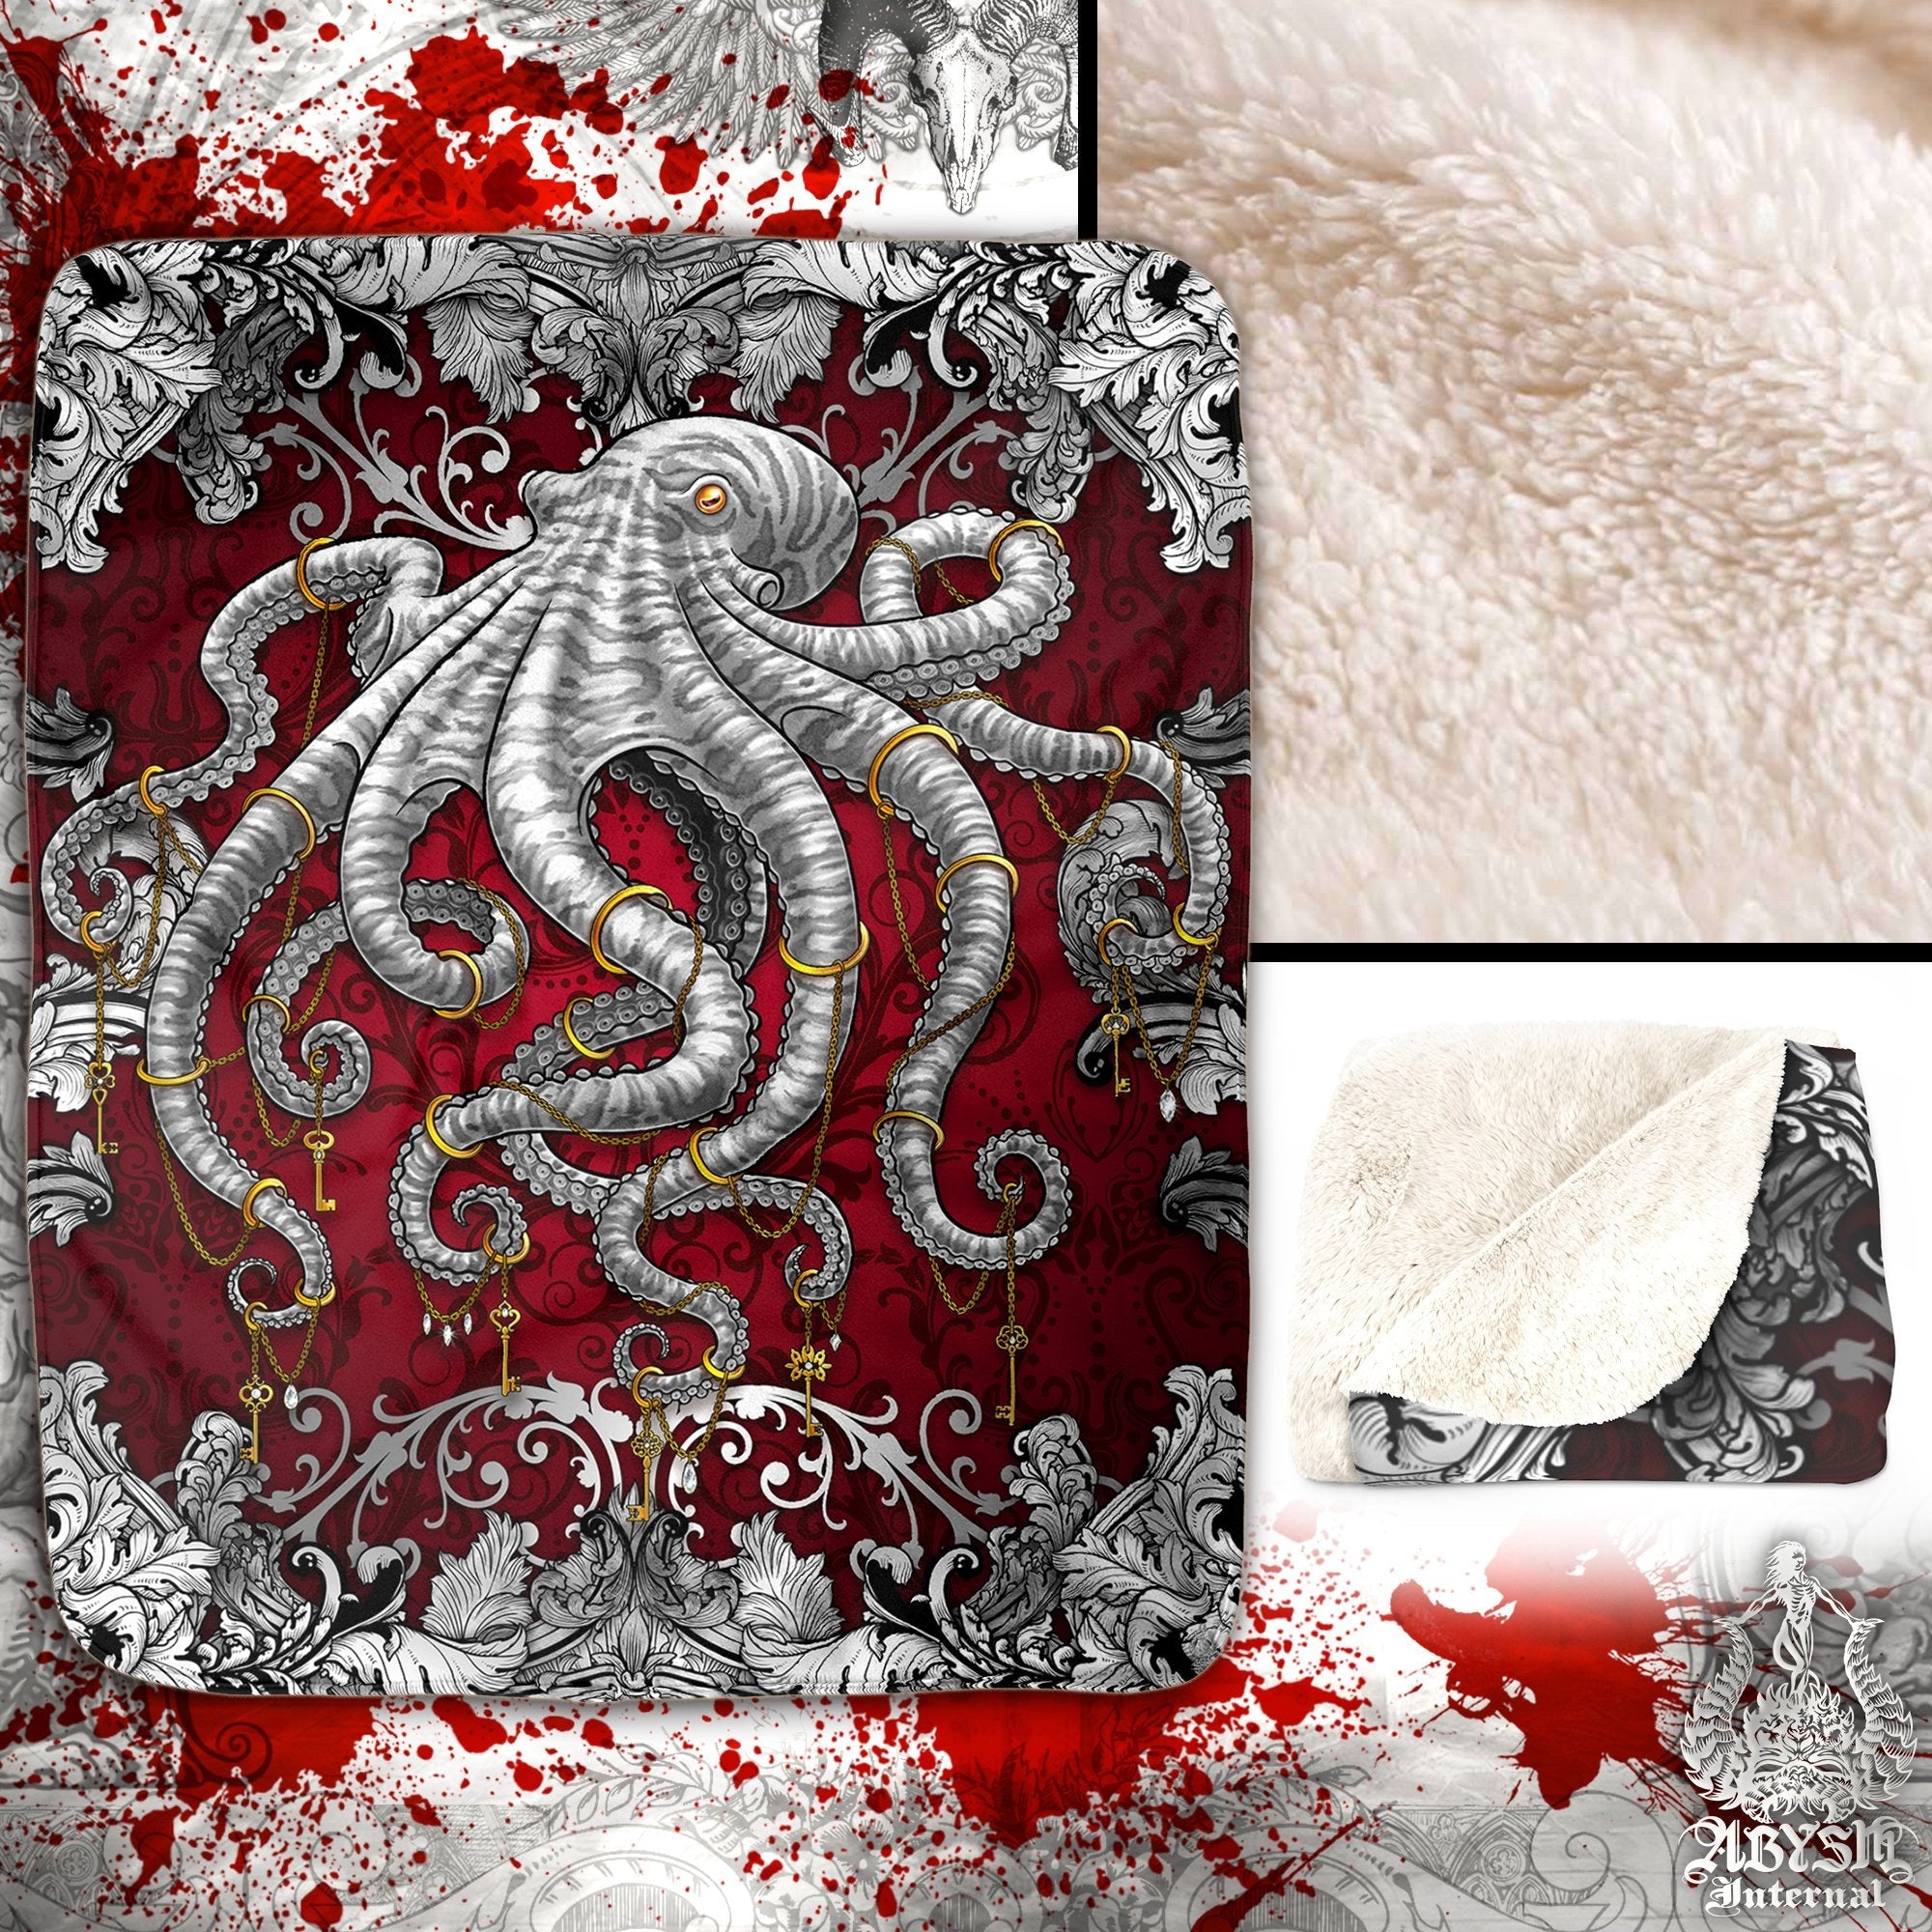 Octopus Throw Fleece Blanket, Coastal Home Decor - Silver & Red - Abysm Internal